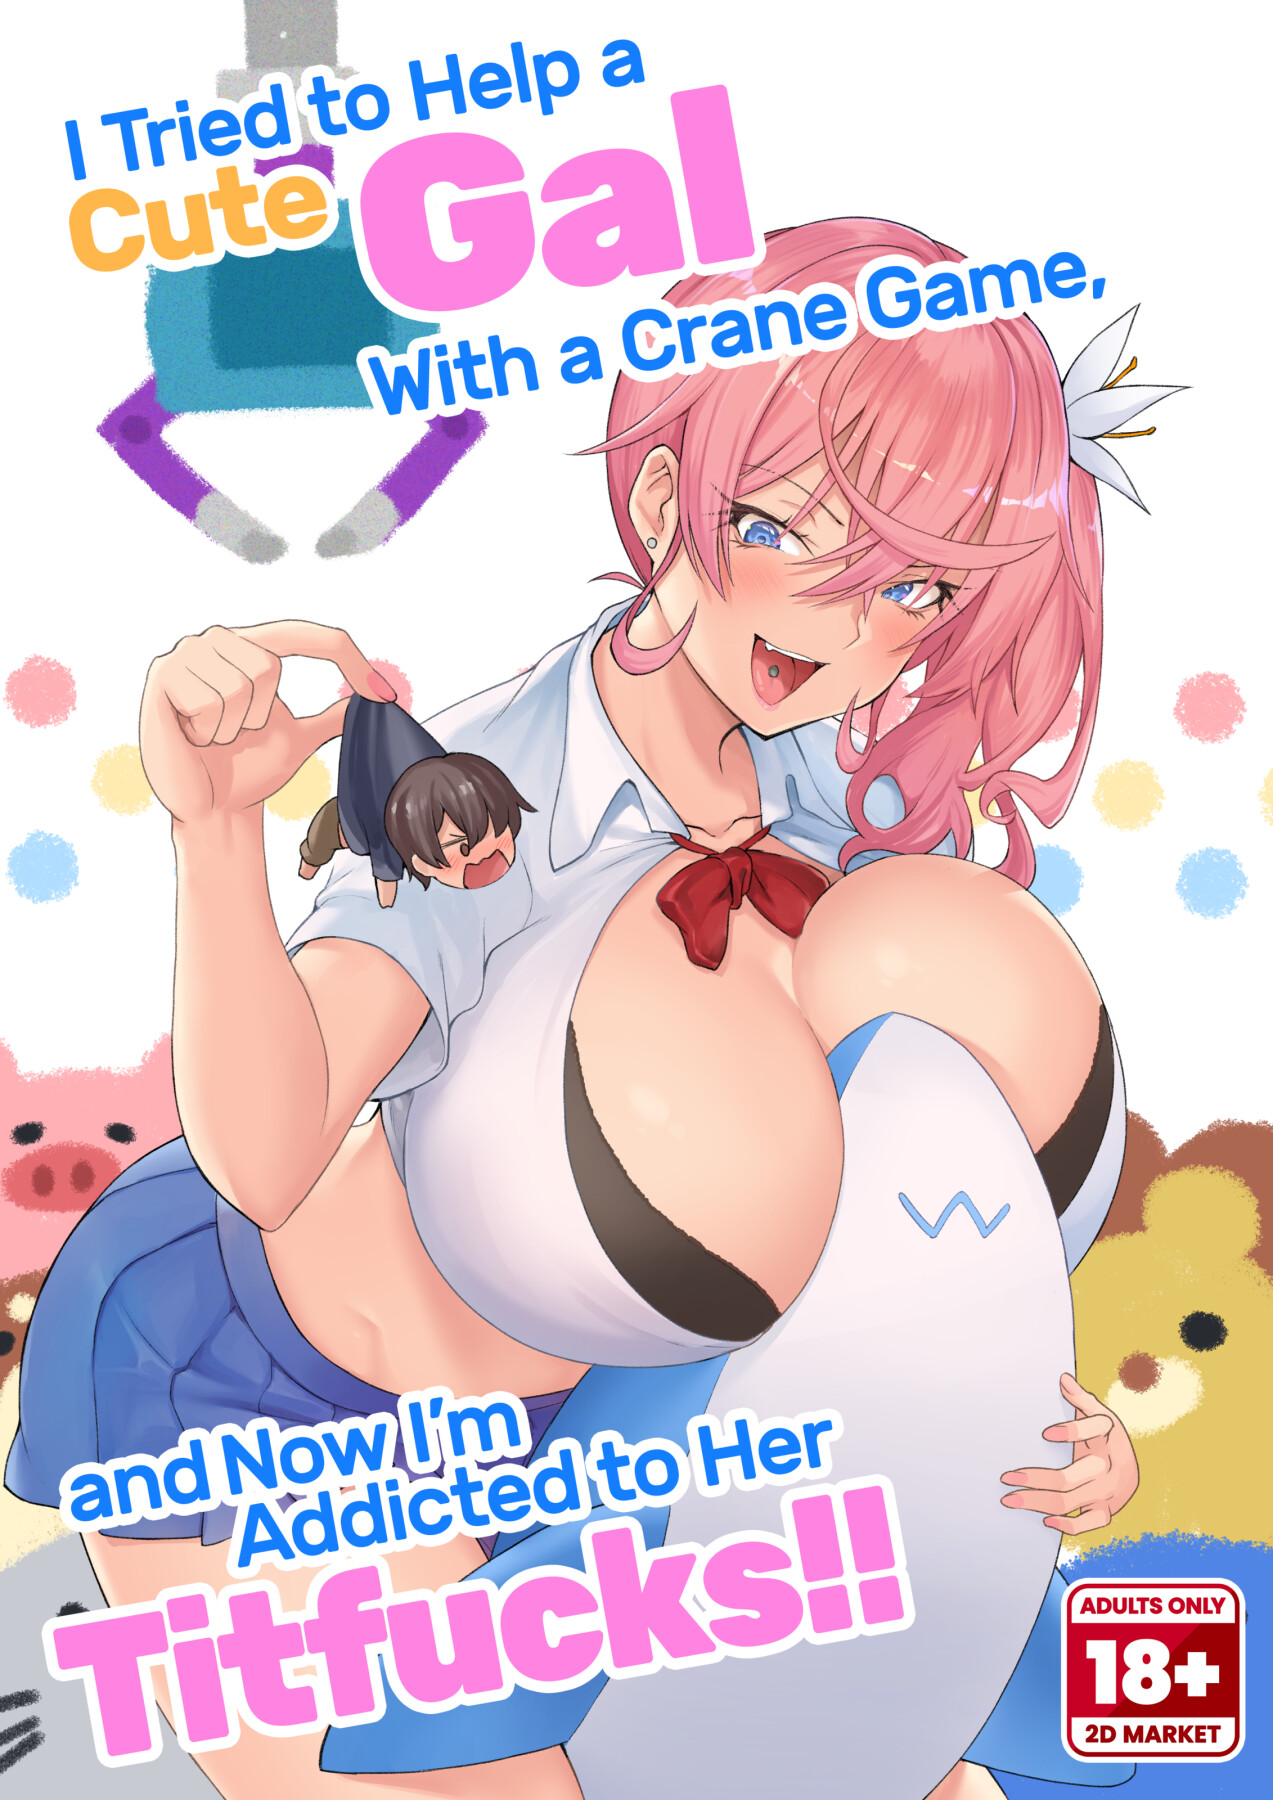 Hentai Manga Comic-I Tried to Help a Cute Gal With a Crane Game, and Now I'm Addicted to Her Titfucks-Read-1